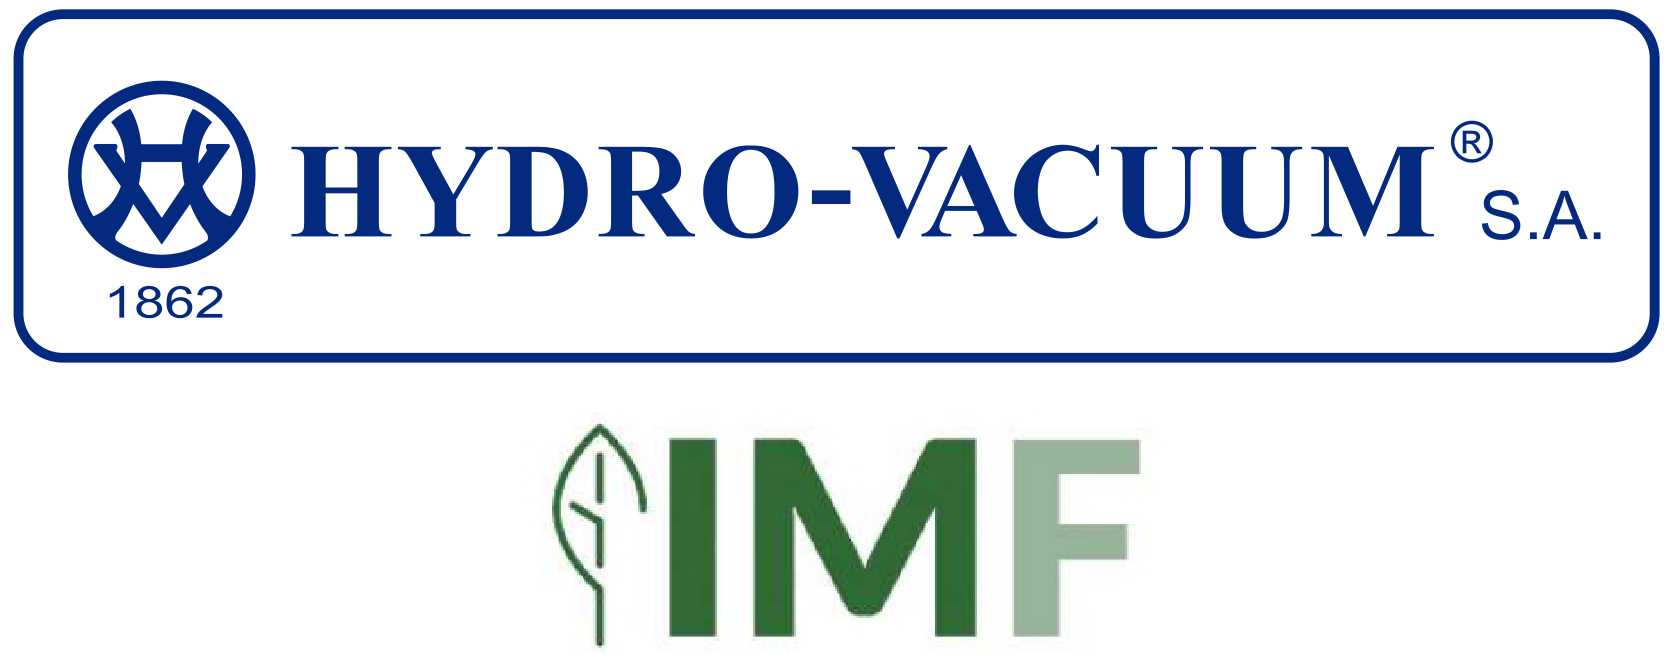 Hydro-Vacuum + IMF